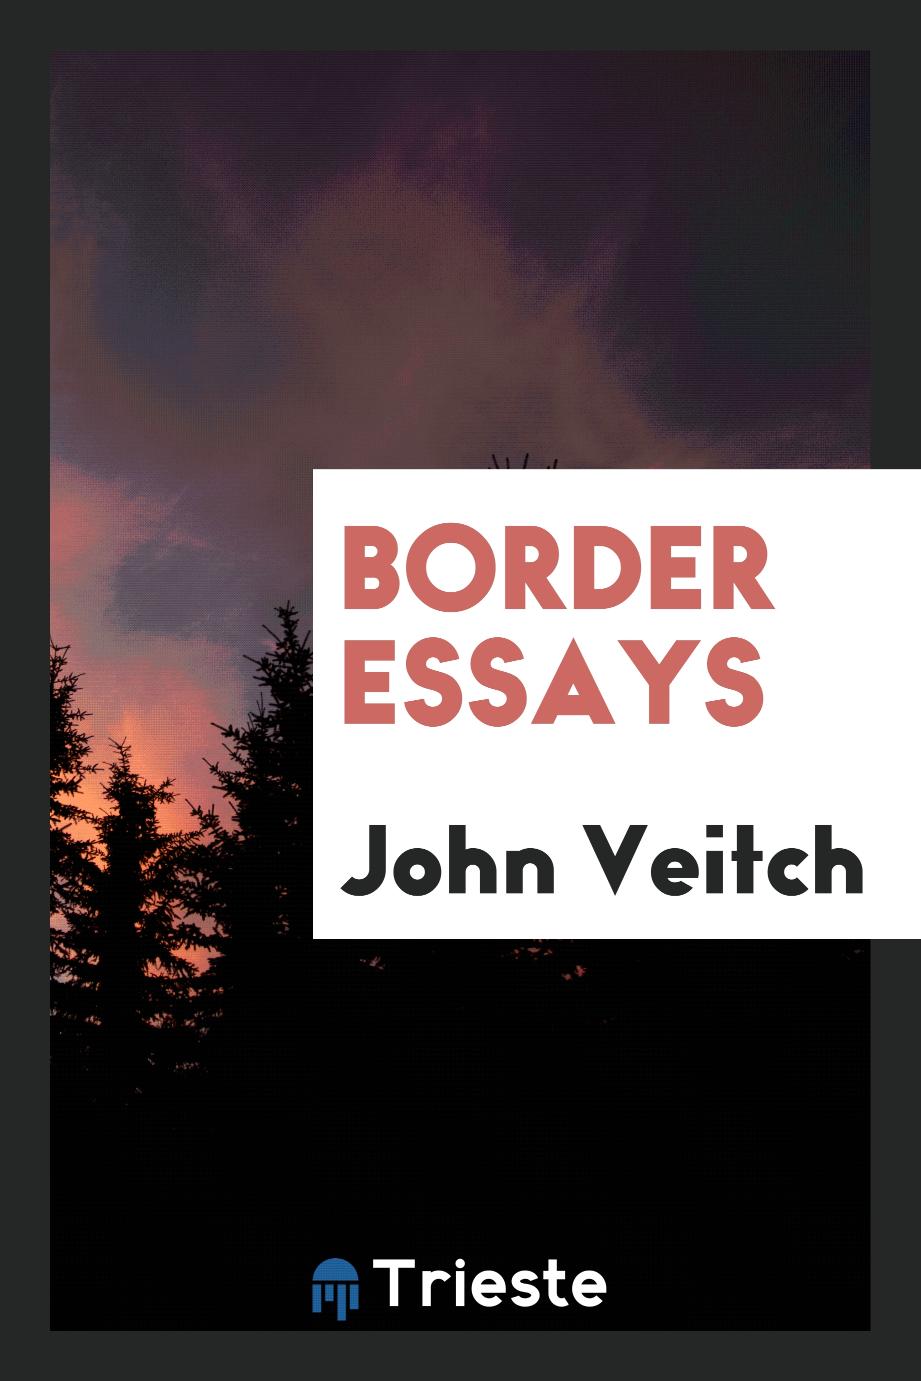 Border essays